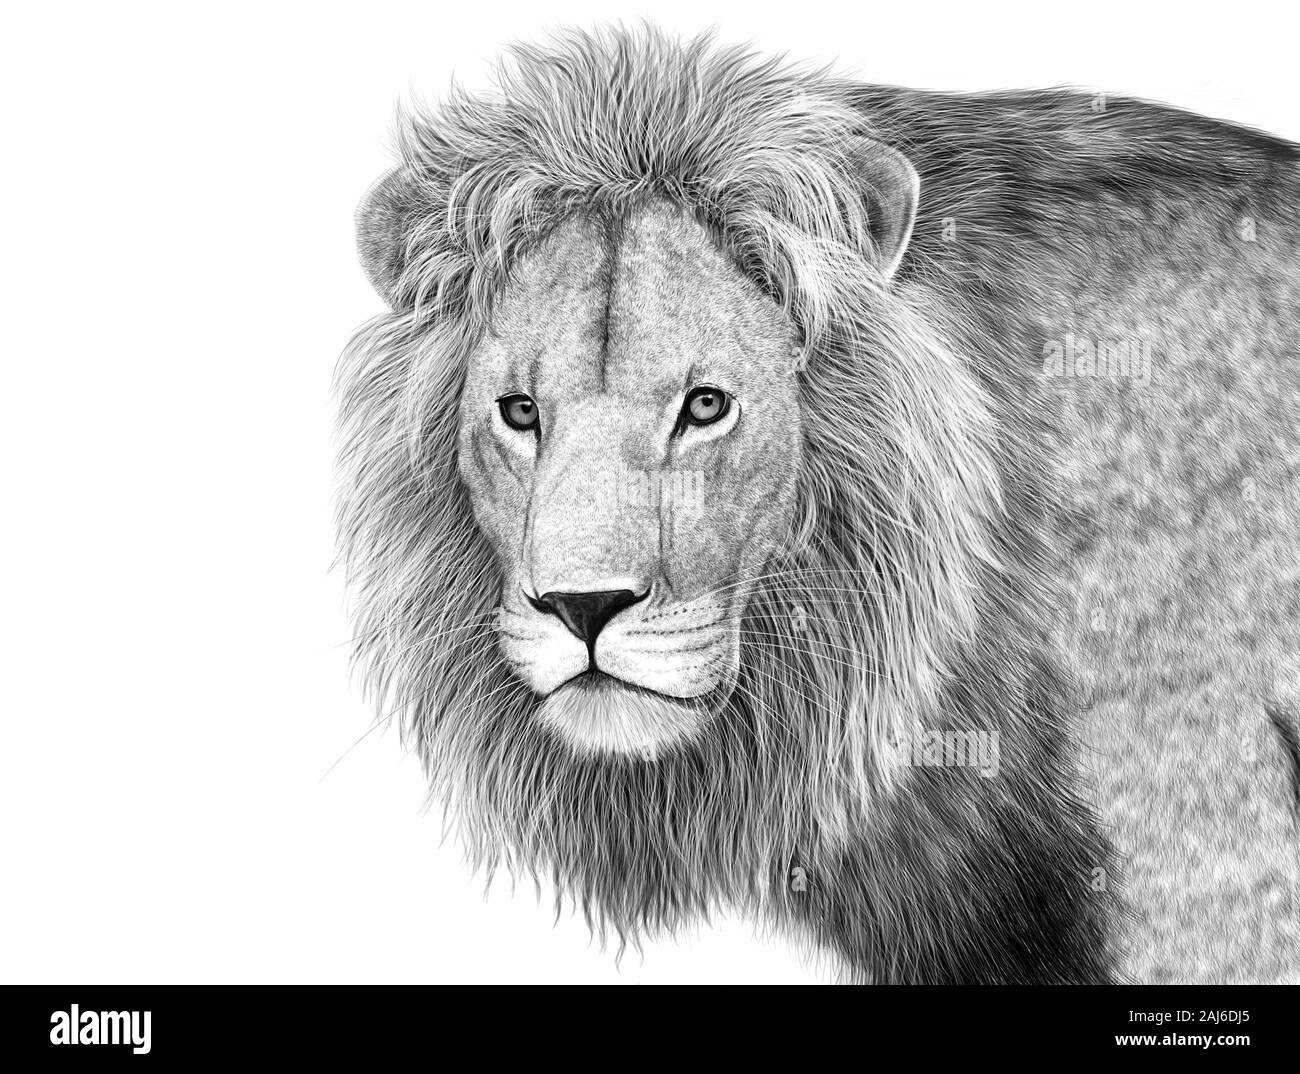 lion digital pencil illustration graphic tablet Stock Photo